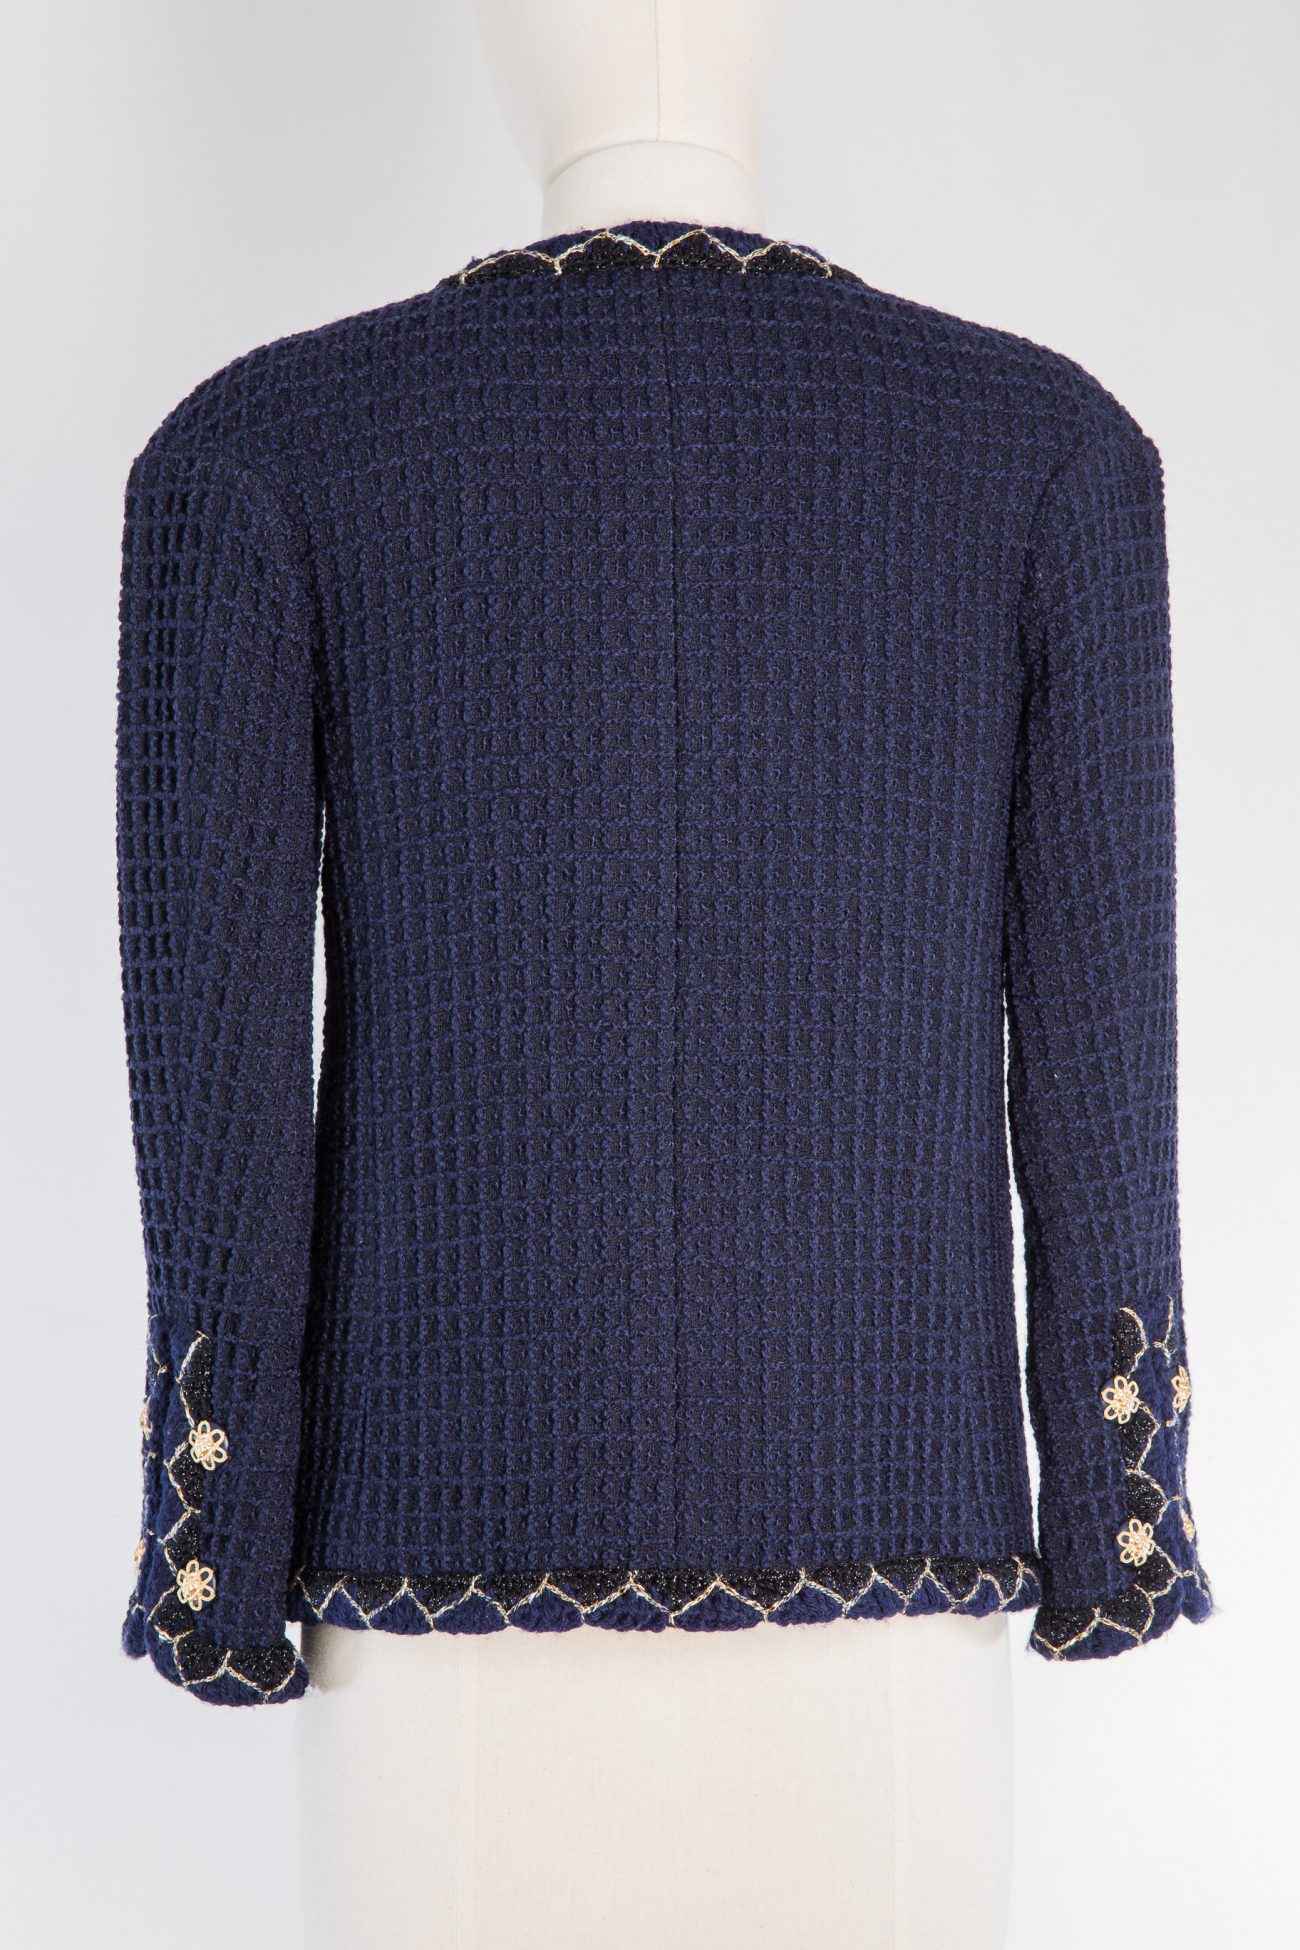 Chanel Tweed Jacket, FR36 - Huntessa Luxury Online Consignment